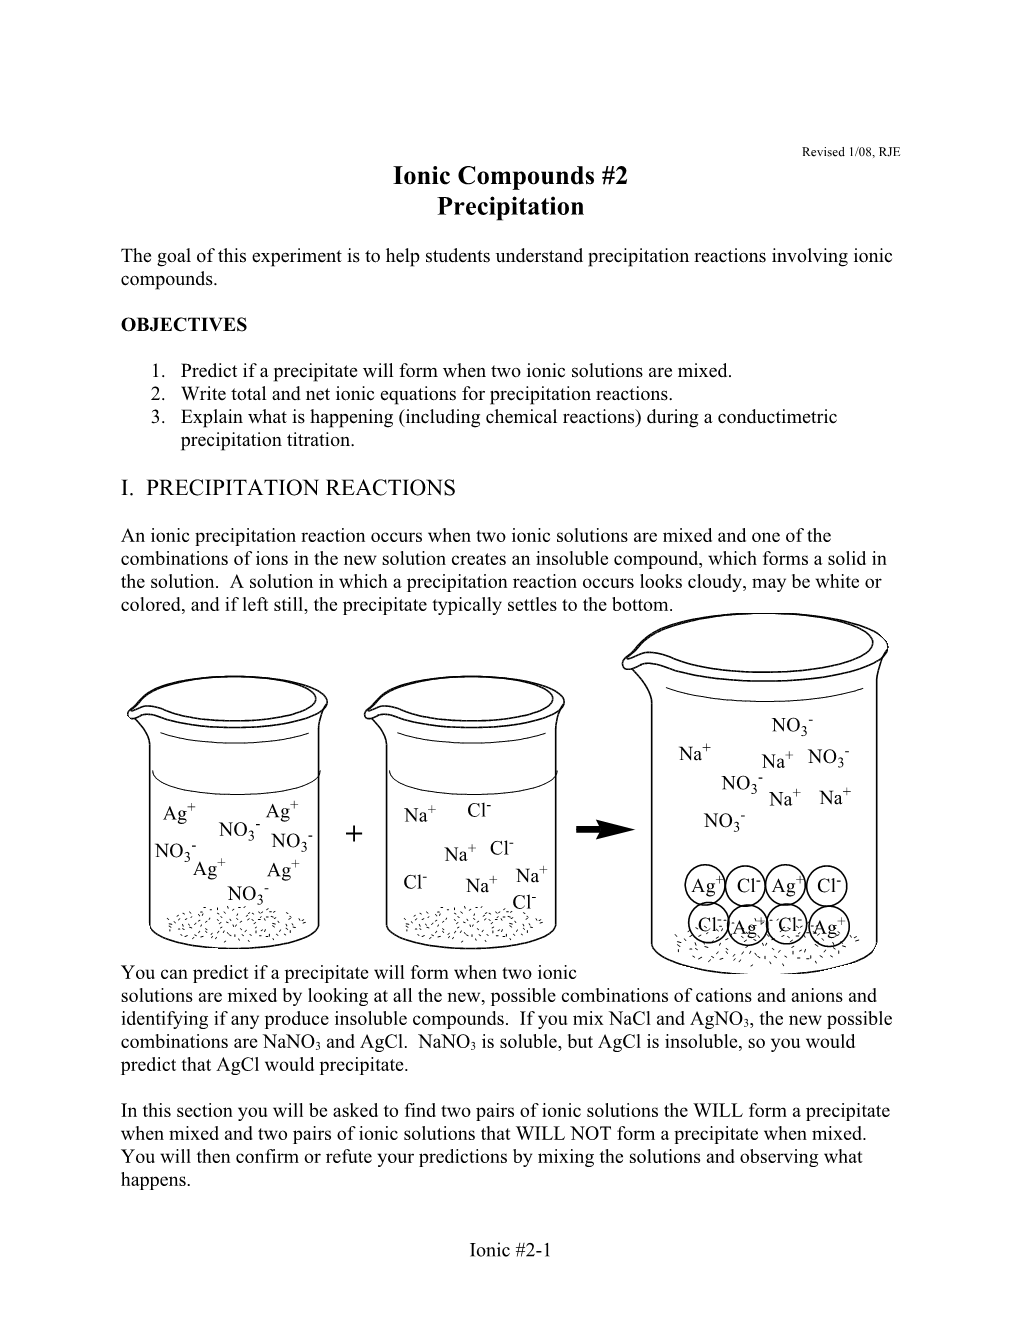 Ionic Compounds, Experiment #2